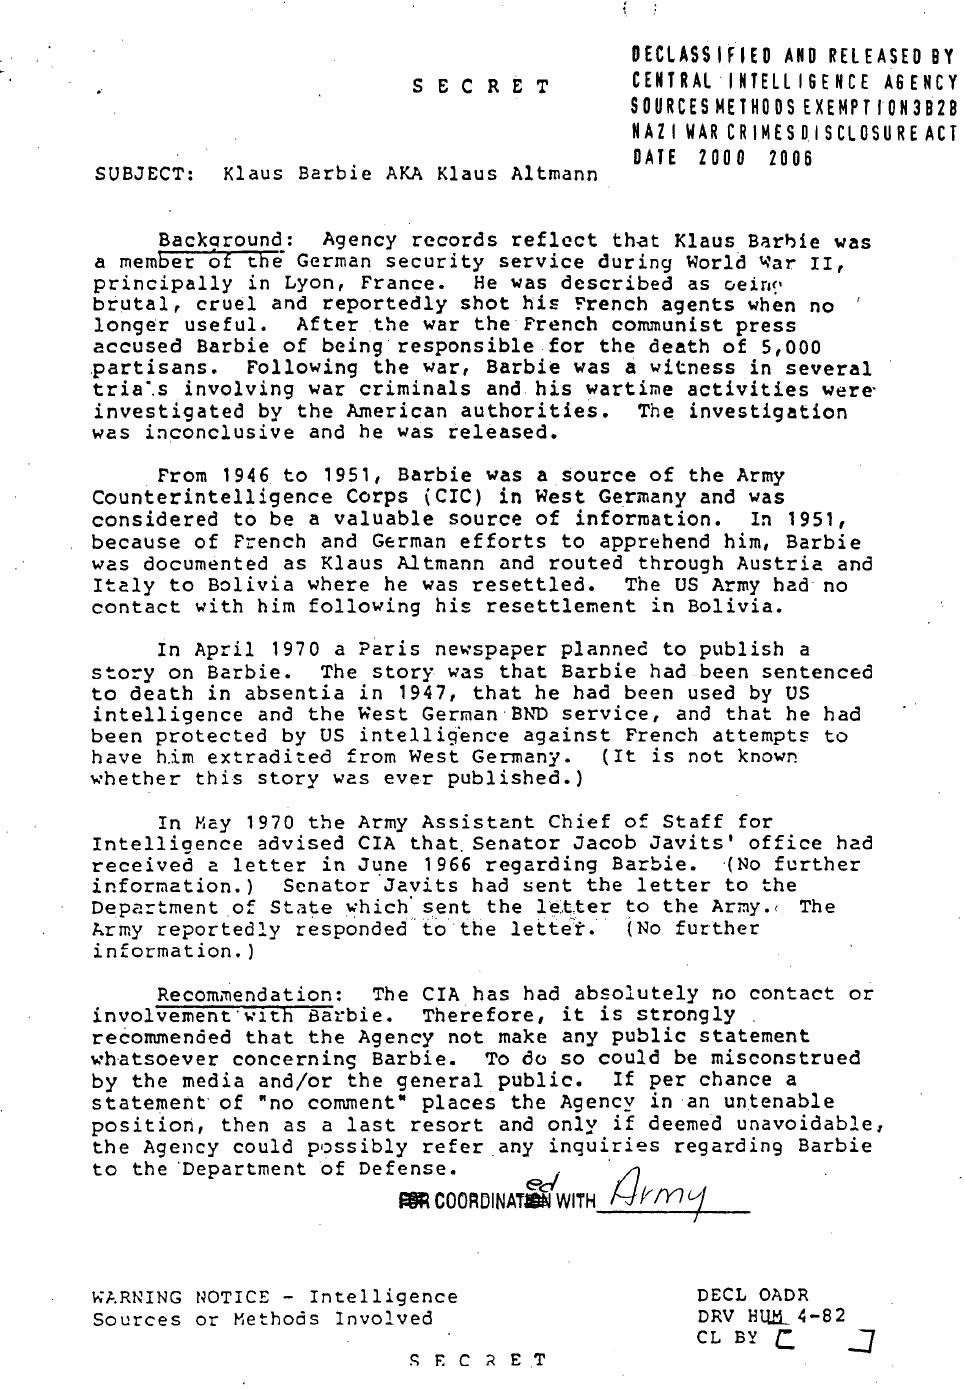 Klaus Barbie CIA Files Page 1